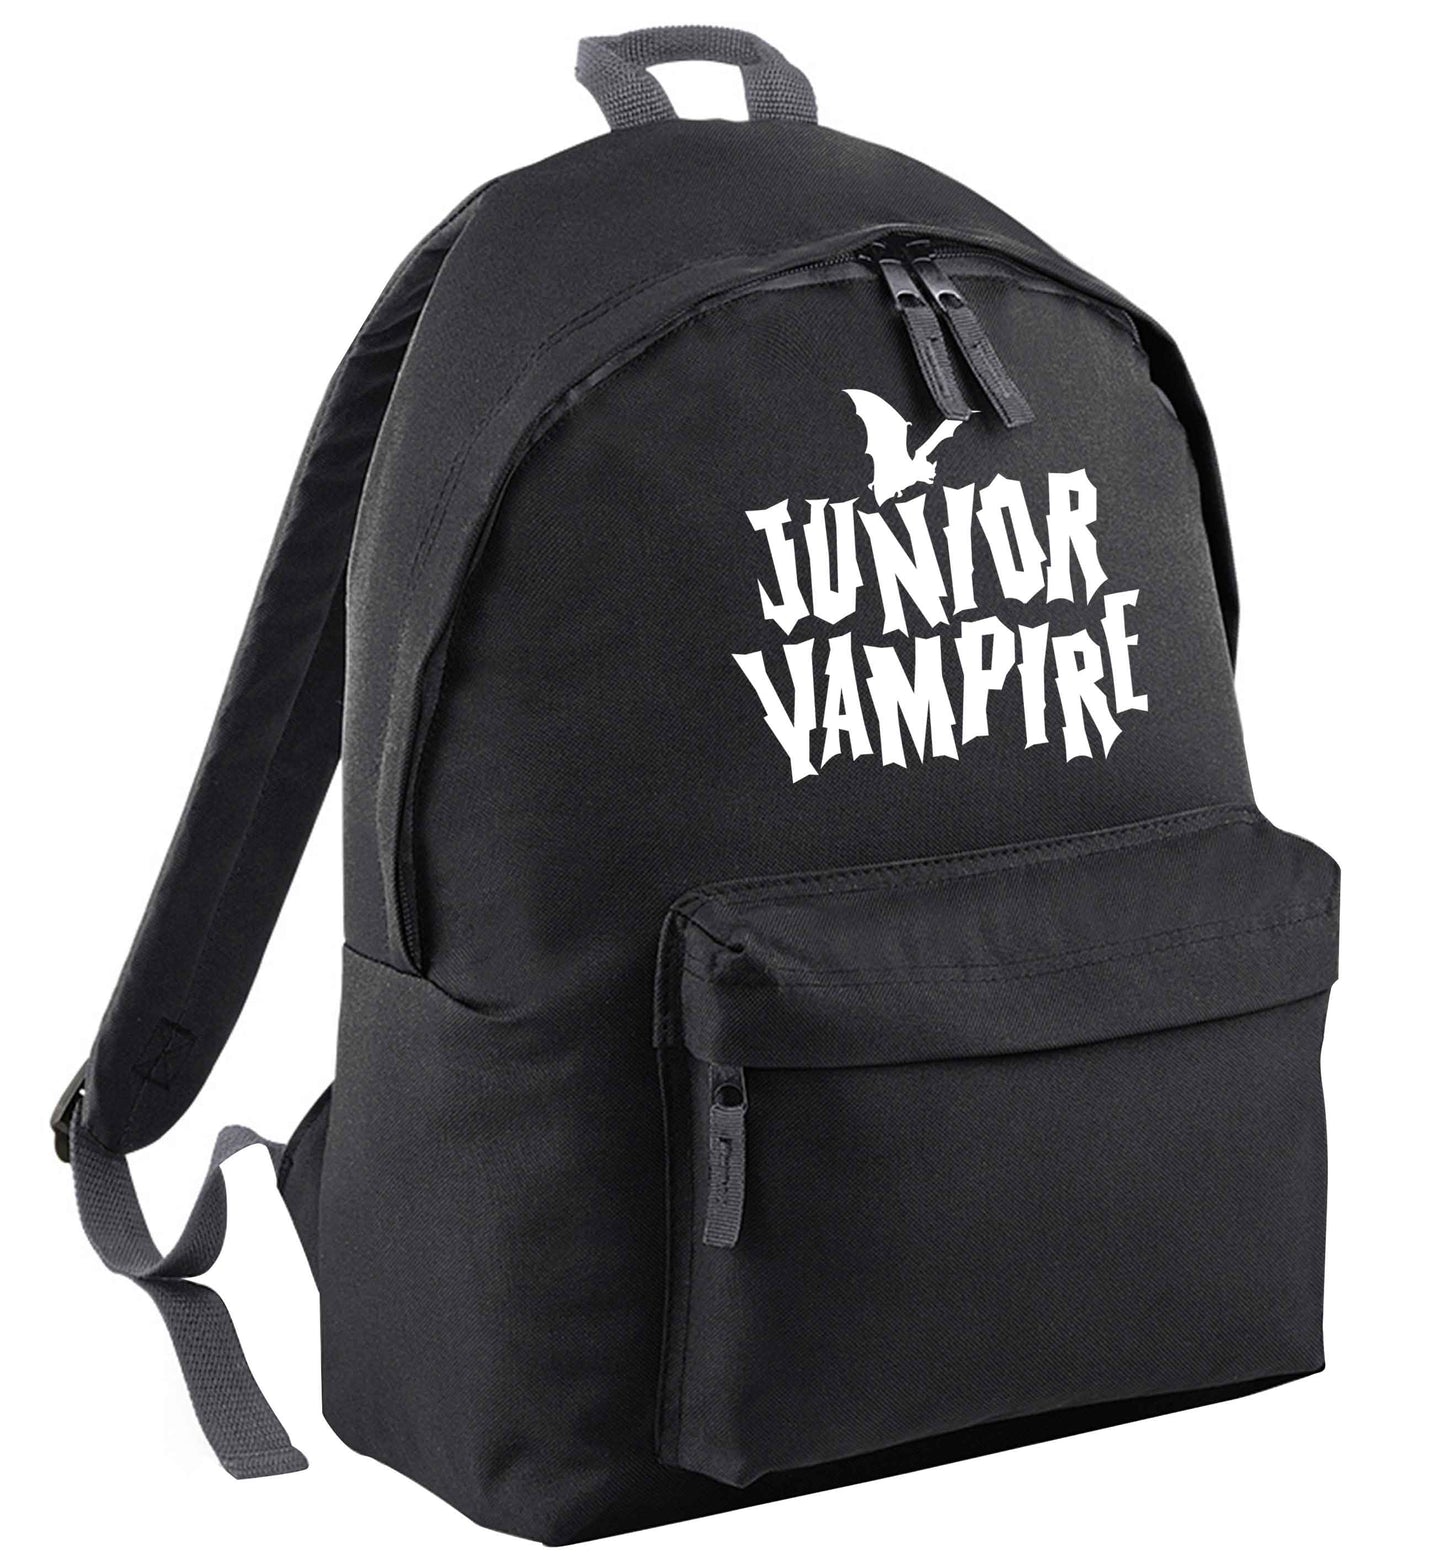 Junior vampire black adults backpack